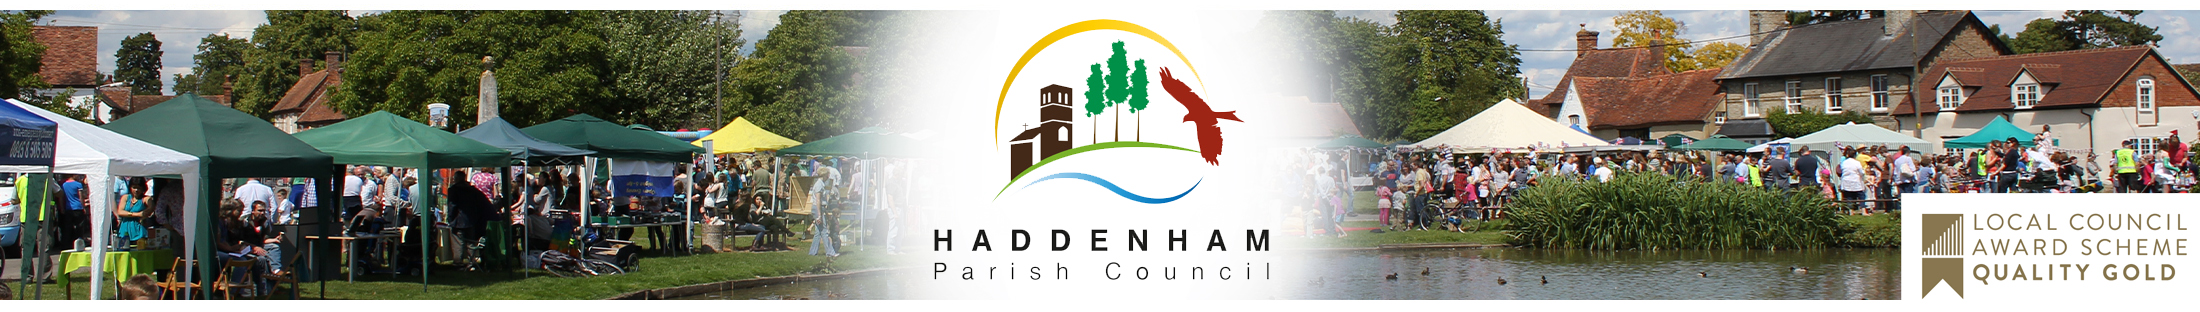 Header Image for Haddenham Parish Council